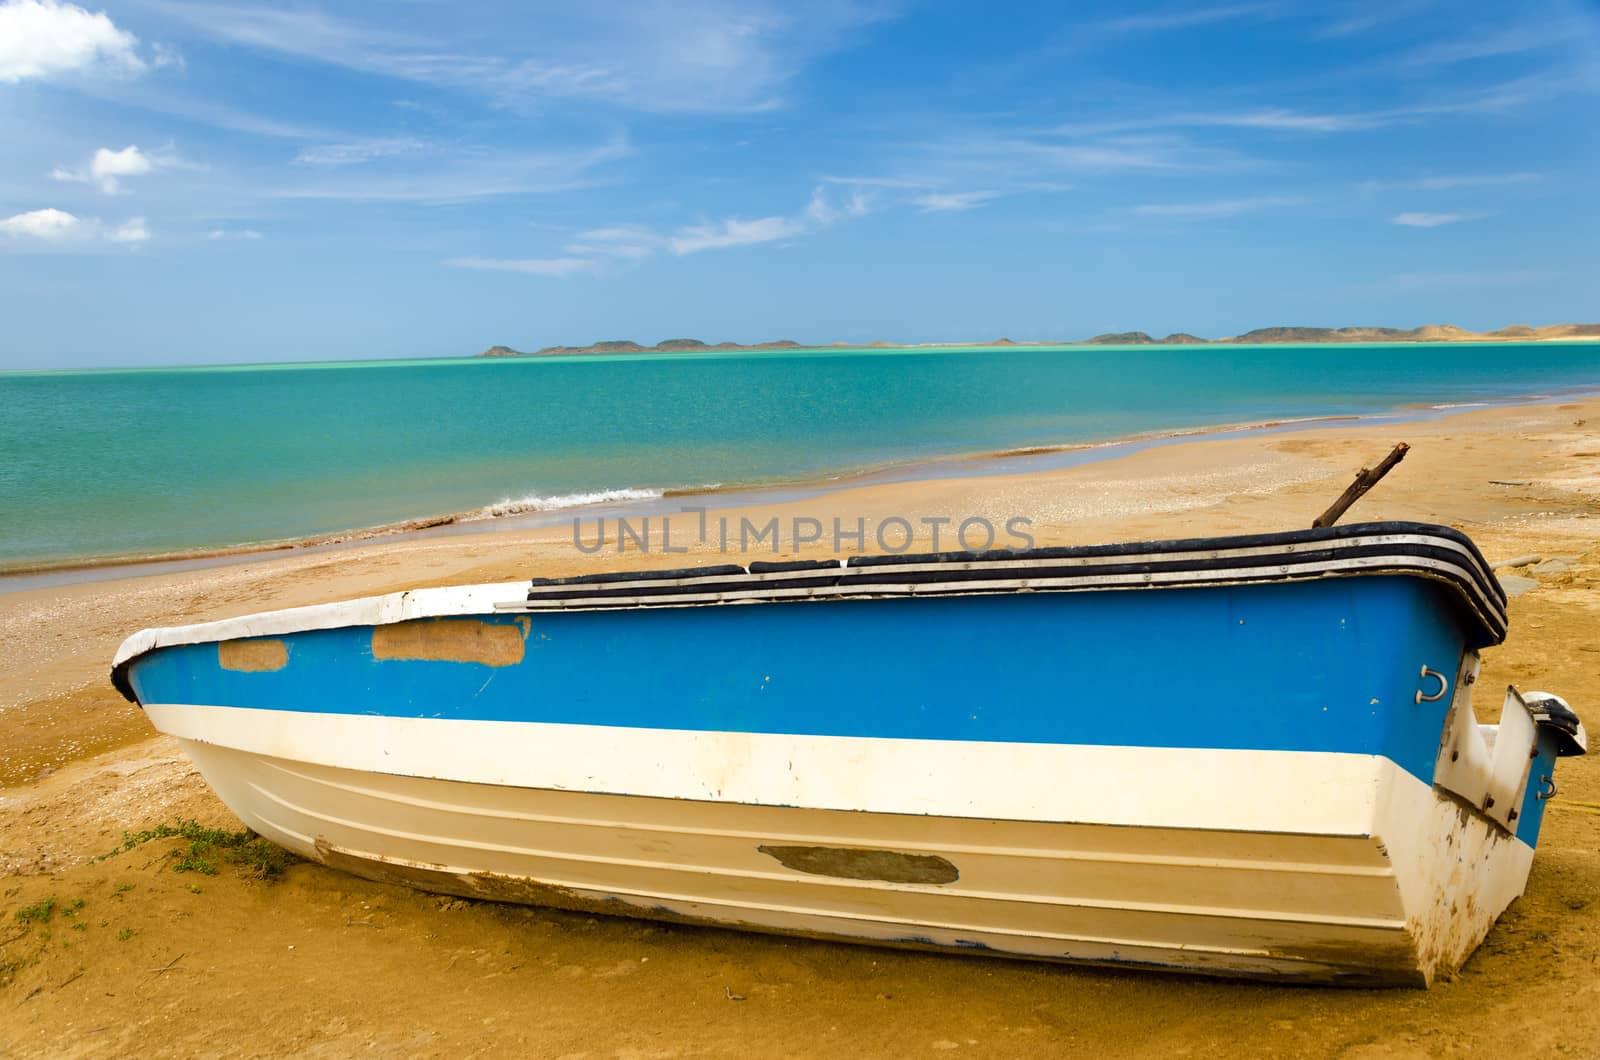 Blue and white boat on a Caribbean beach in La Guajira, Colombia